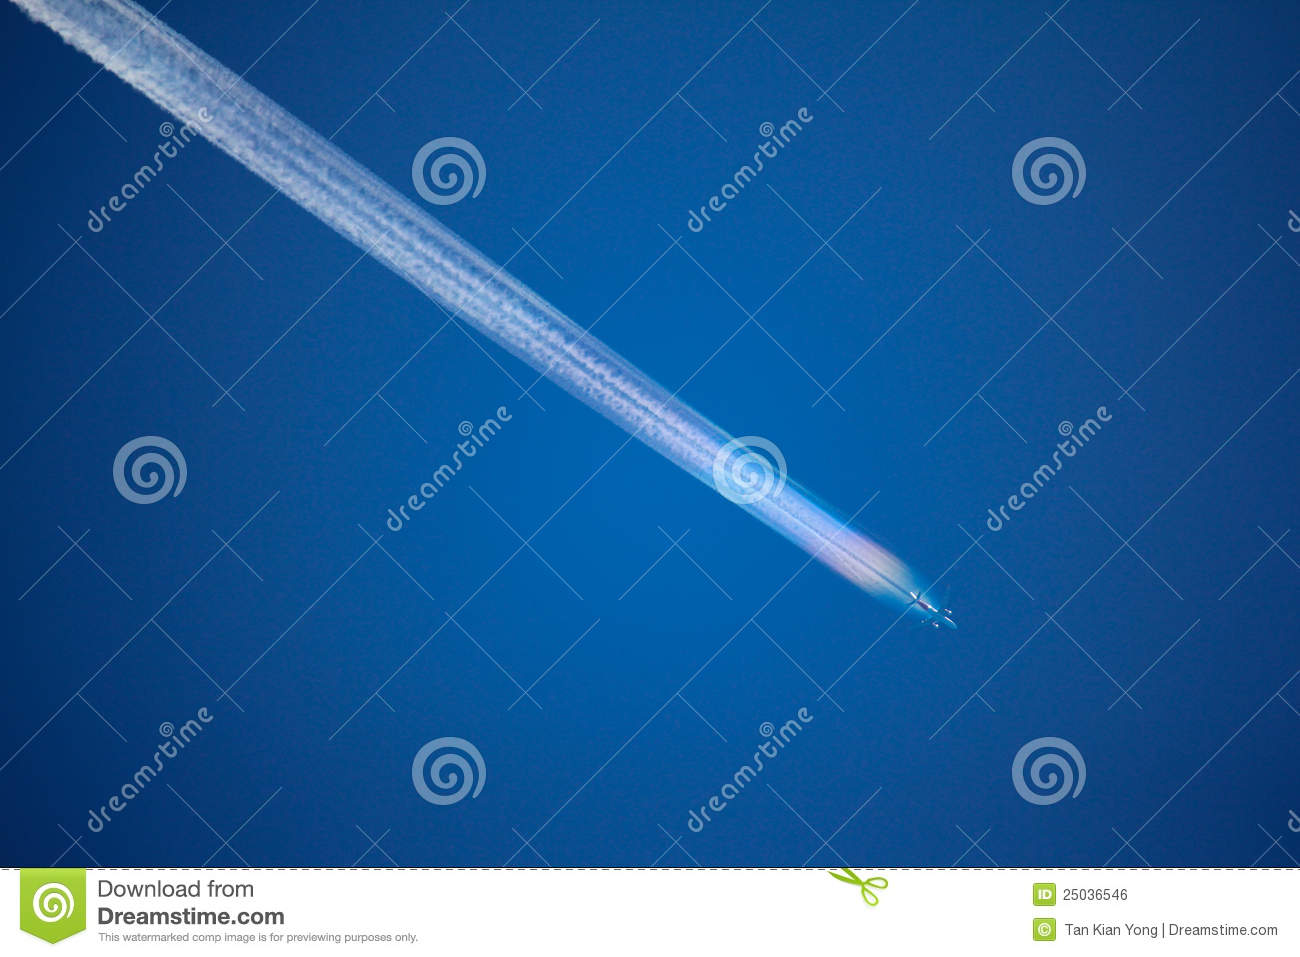 Jet Airplane Producing Stream Royalty Free Stock Image   Image